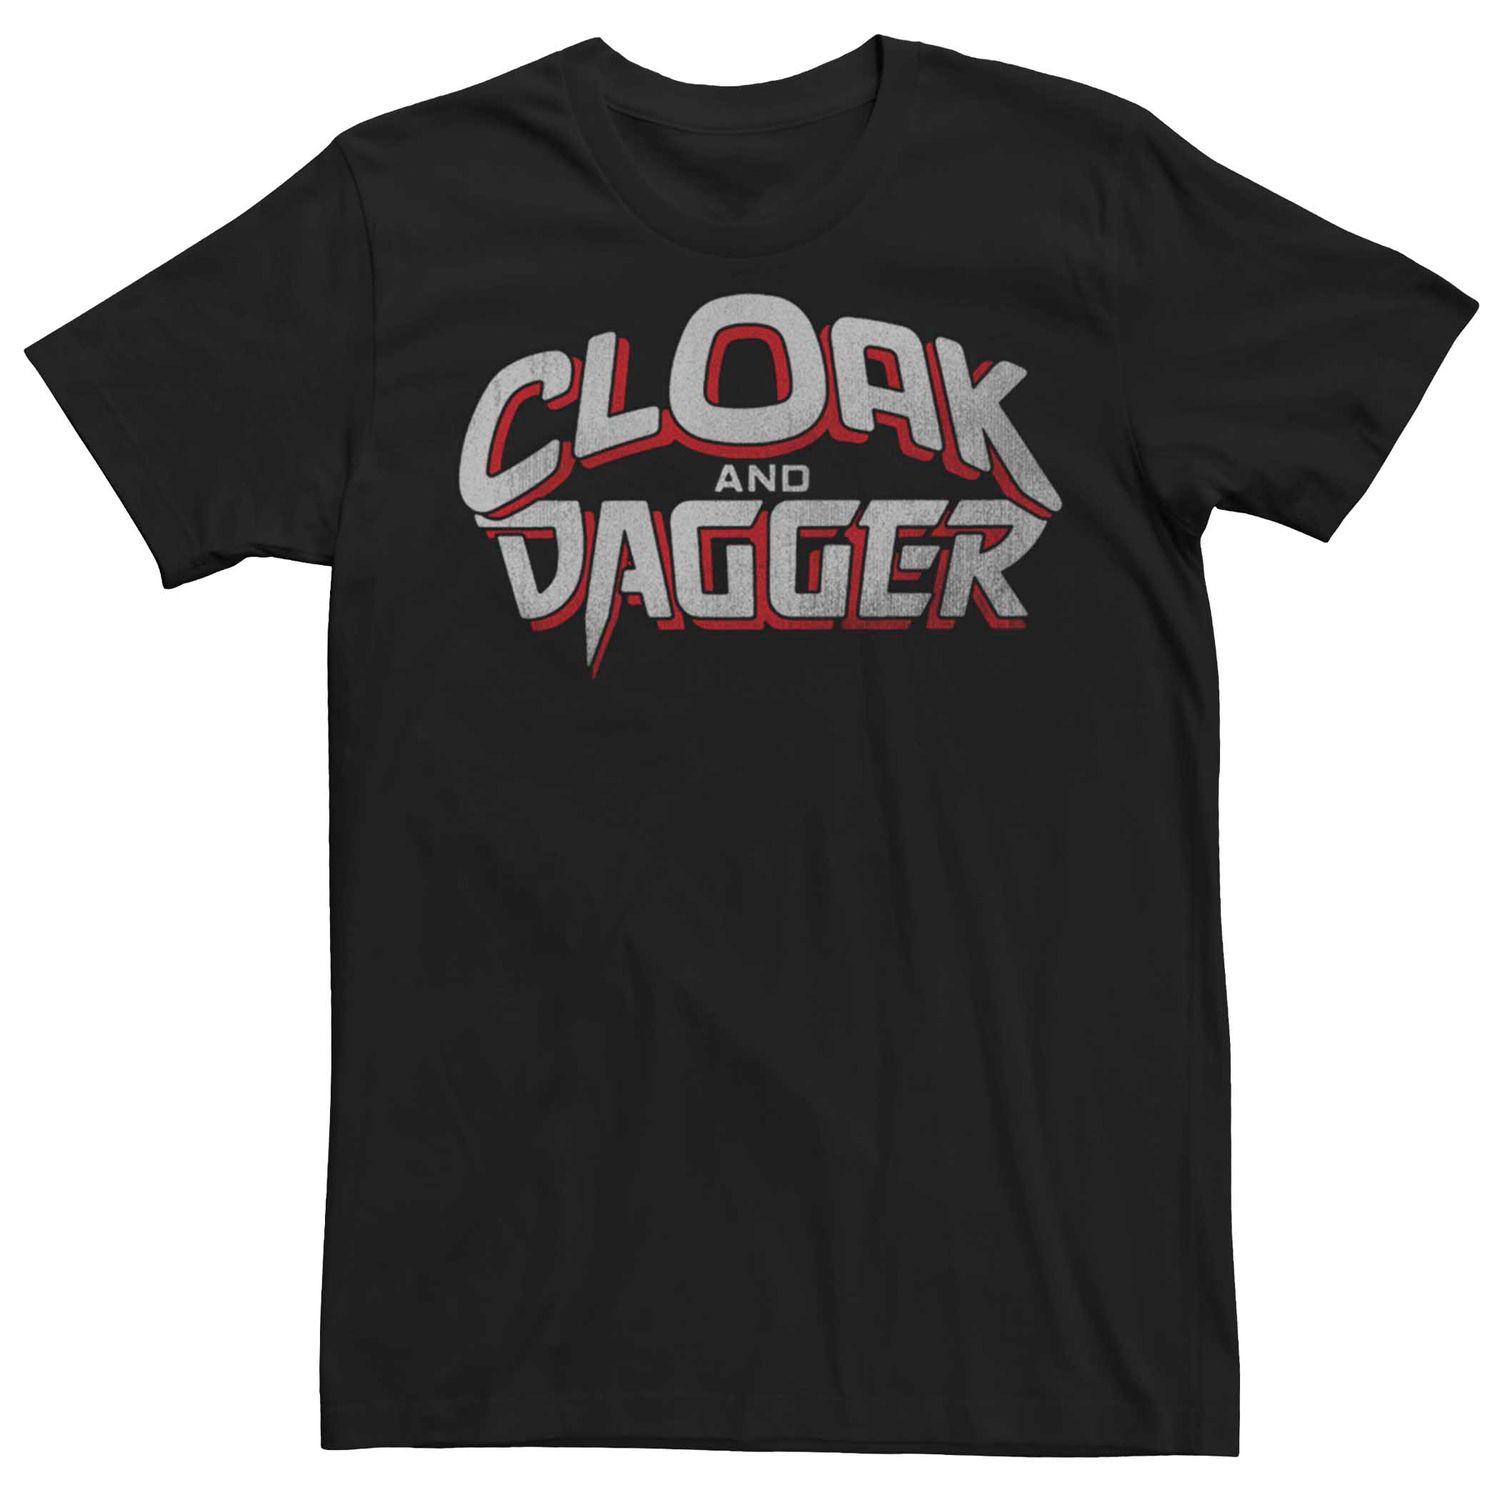 Мужская футболка Marvel's Cloak And Dagger с потертым логотипом Licensed Character